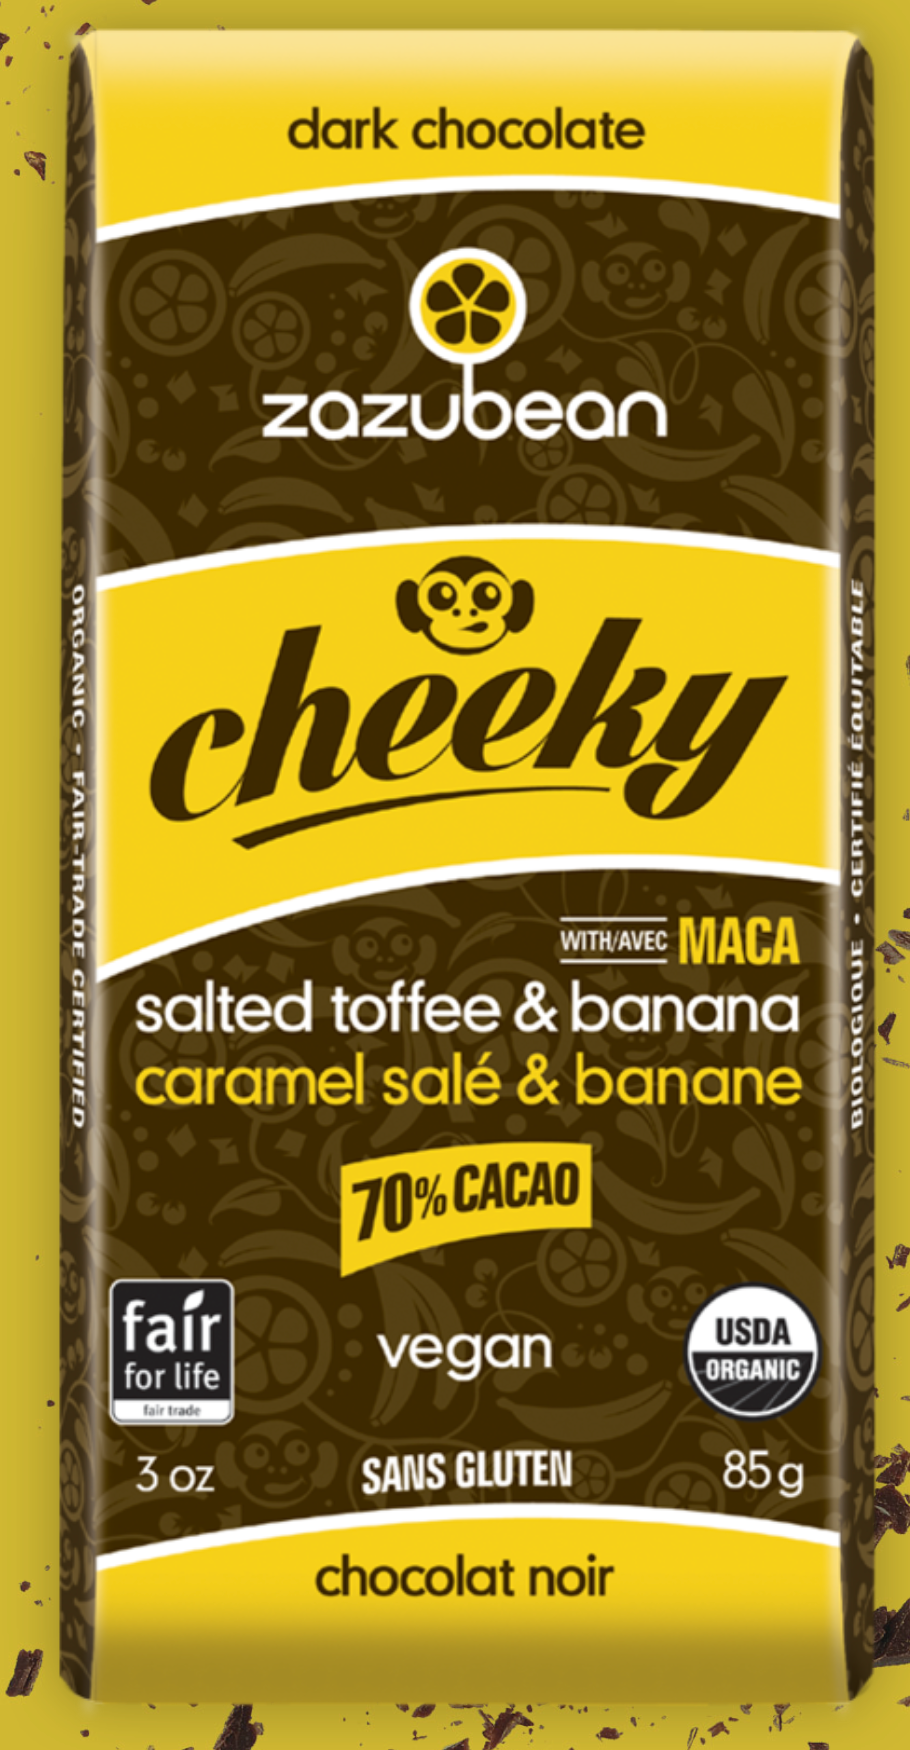 Zazubean chocolate - Cheeky